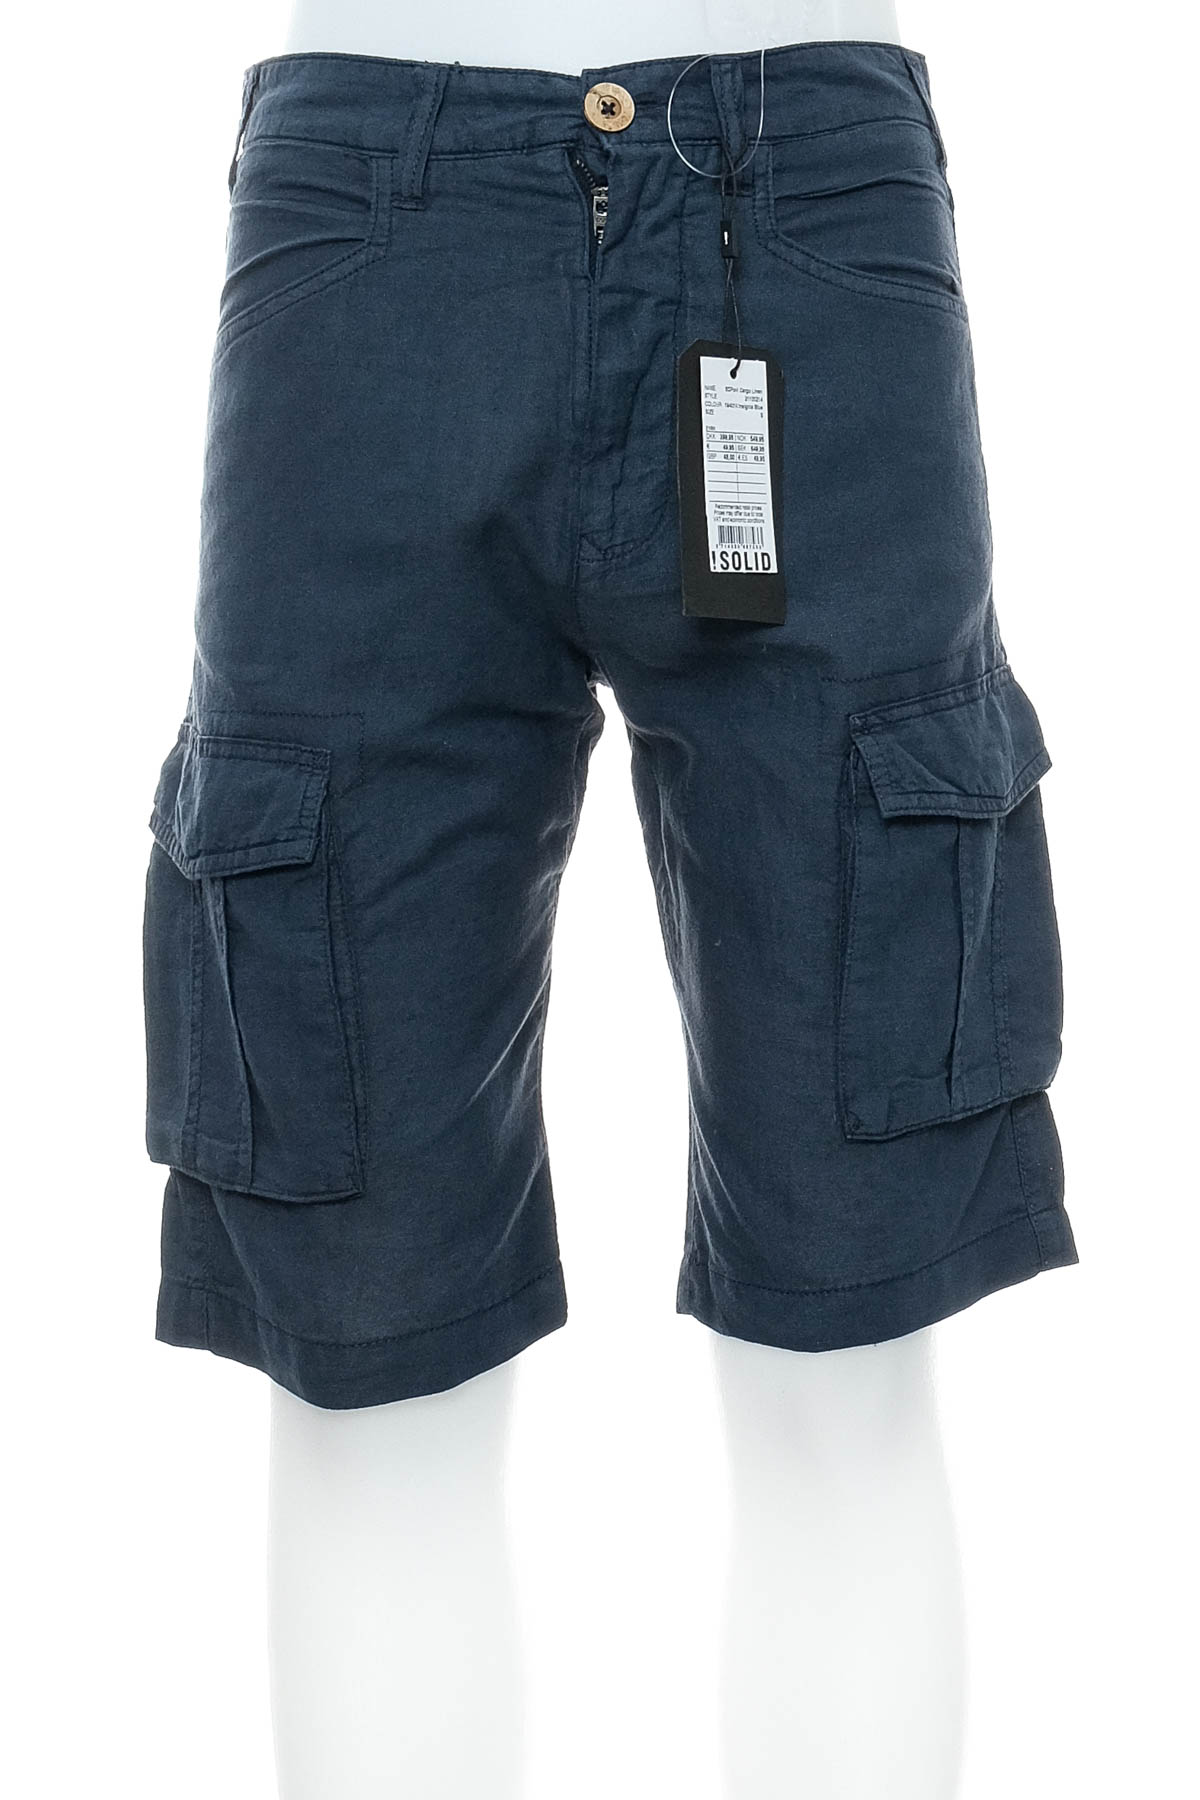 Men's shorts - ! Solid - 0